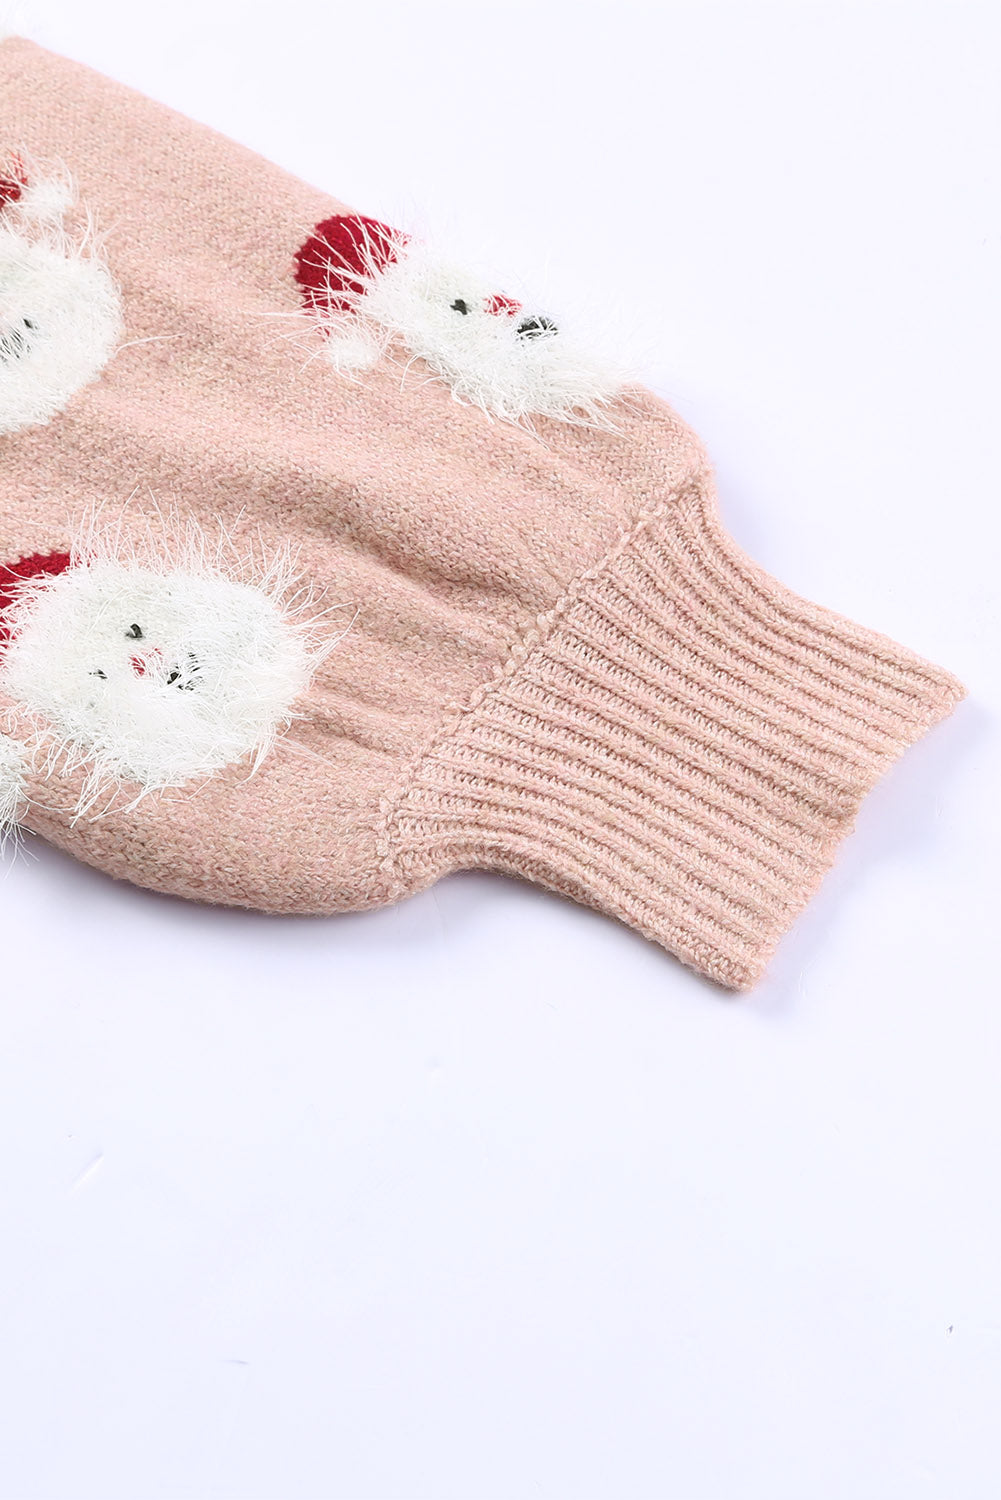 Light Pink Fuzzy Christmas Santa Clause Sweater Dress